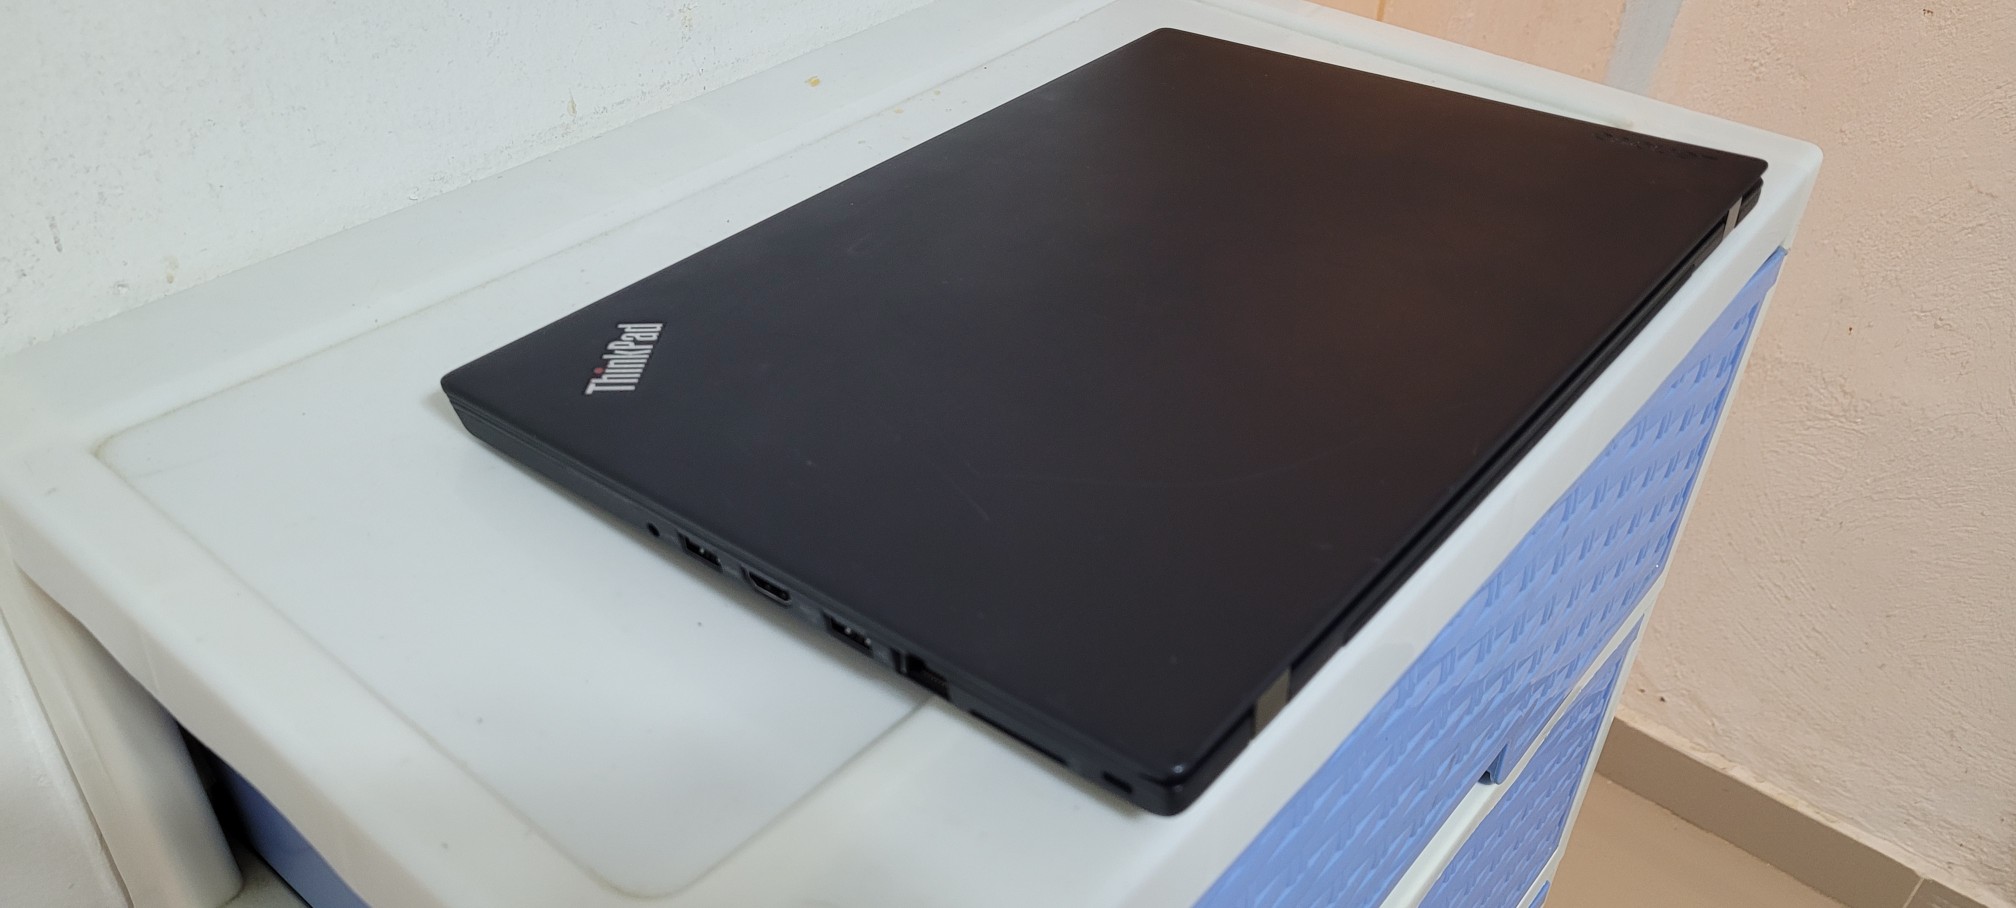 computadoras y laptops - Lenovo T490 14 Pulg Core i5 10th Gen Ram 16gb ddr4 Video 8gb Full ips 2